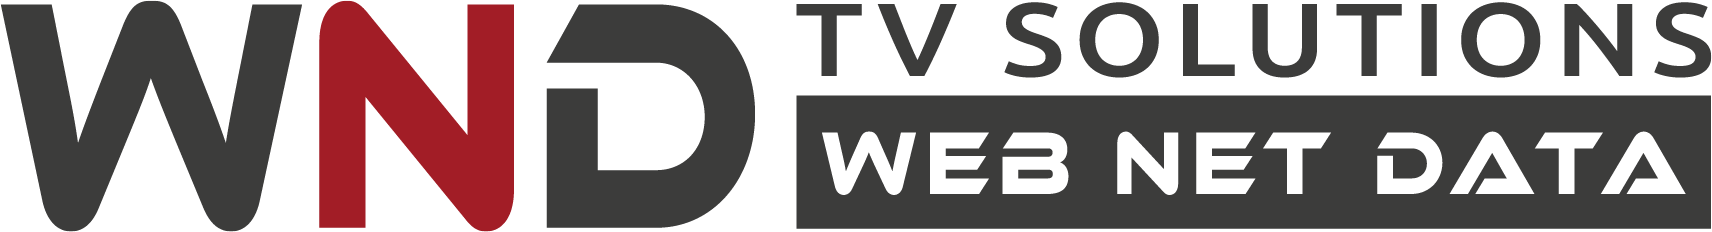 WND TV logo